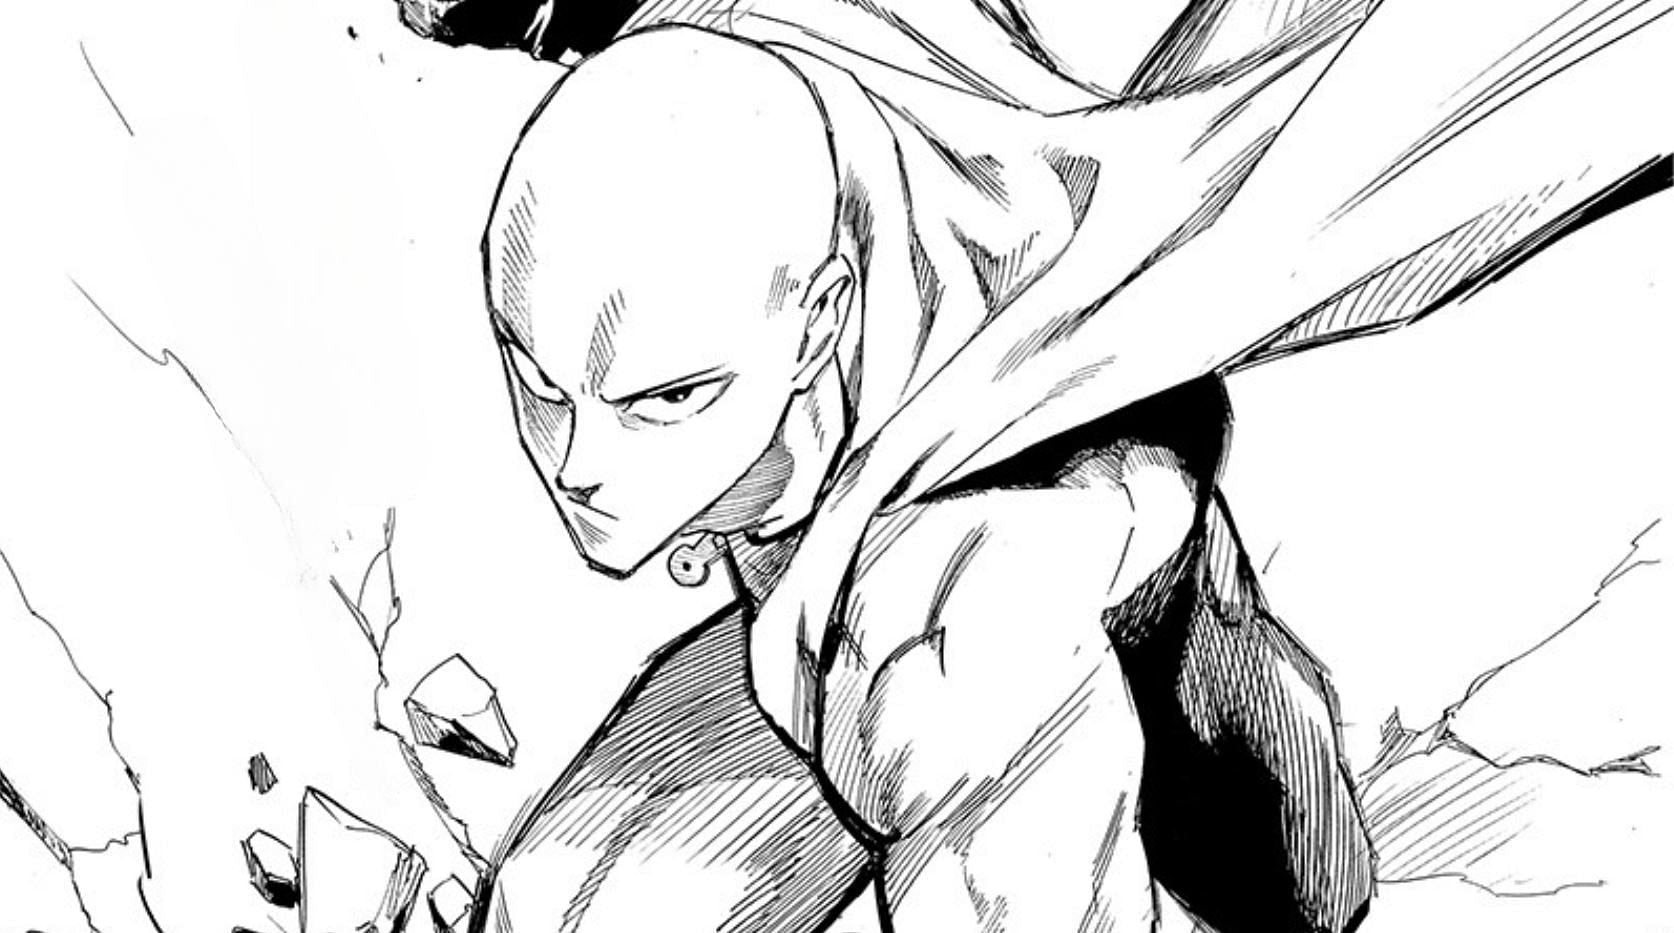 Saitama as seen in One Punch Man manga (Image via Shueisha)